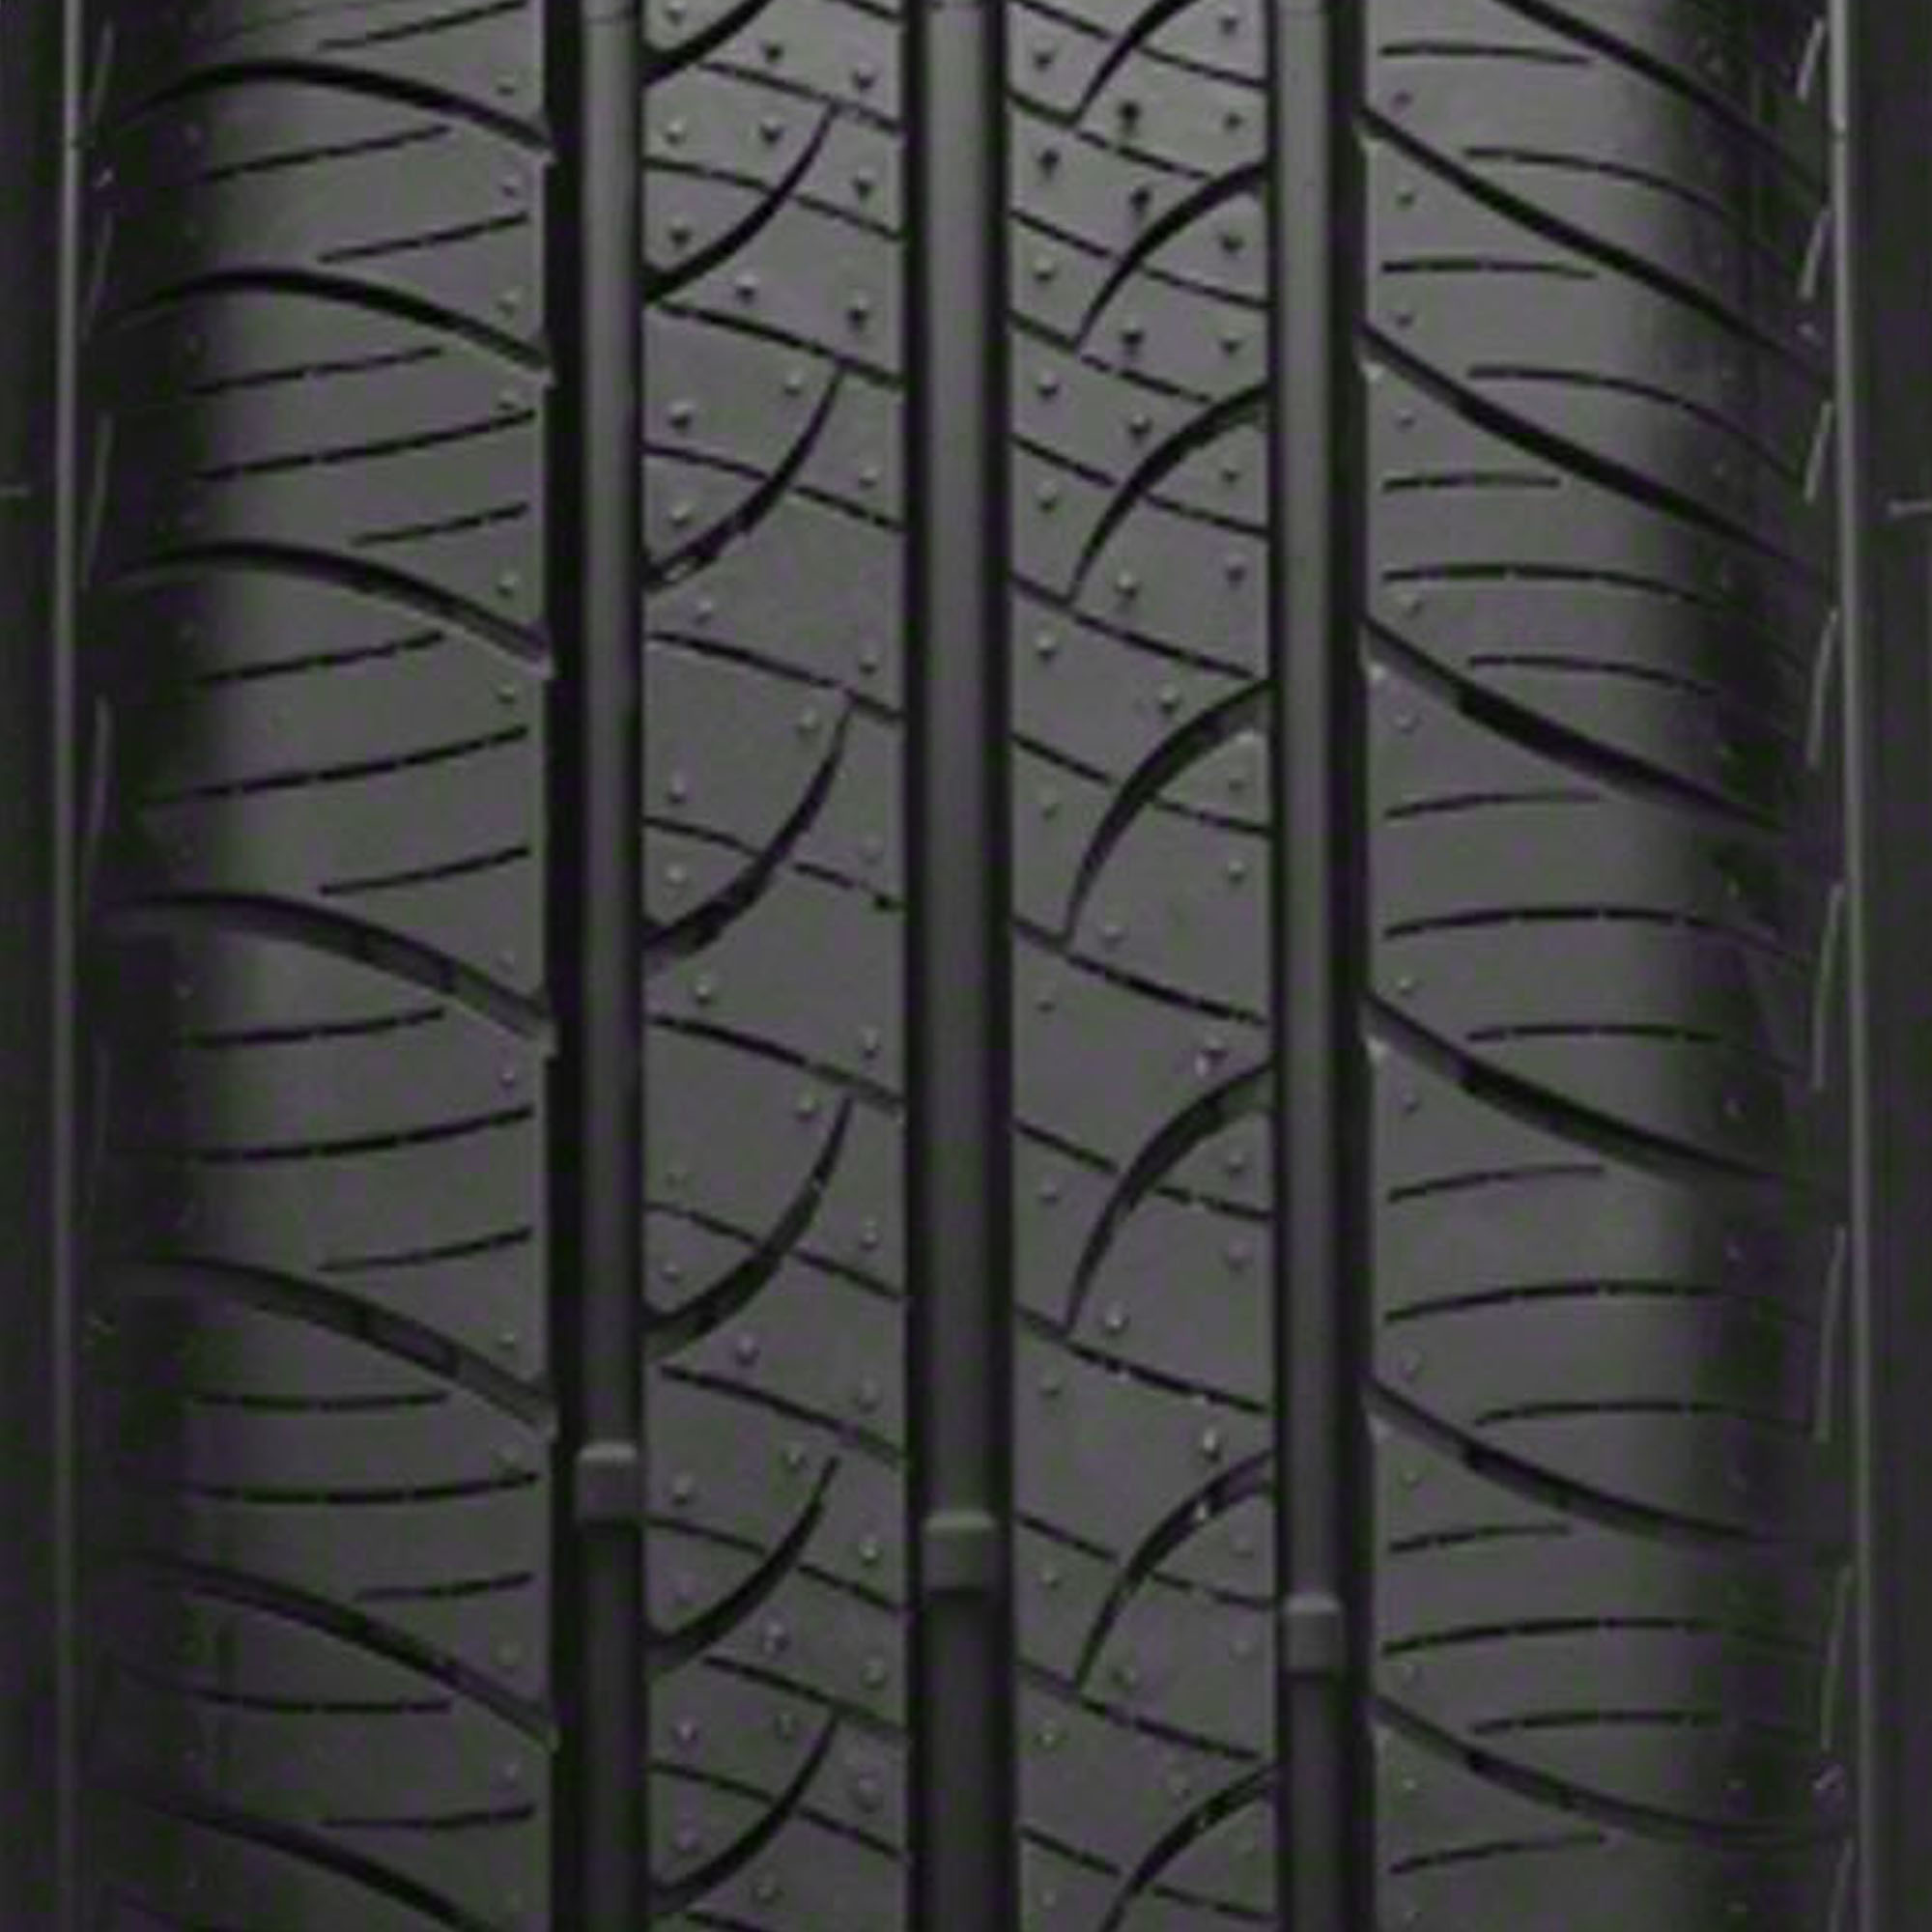 Hankook Optimo (H724) All Season P175/70R14 84T Passenger Tire - image 4 of 6